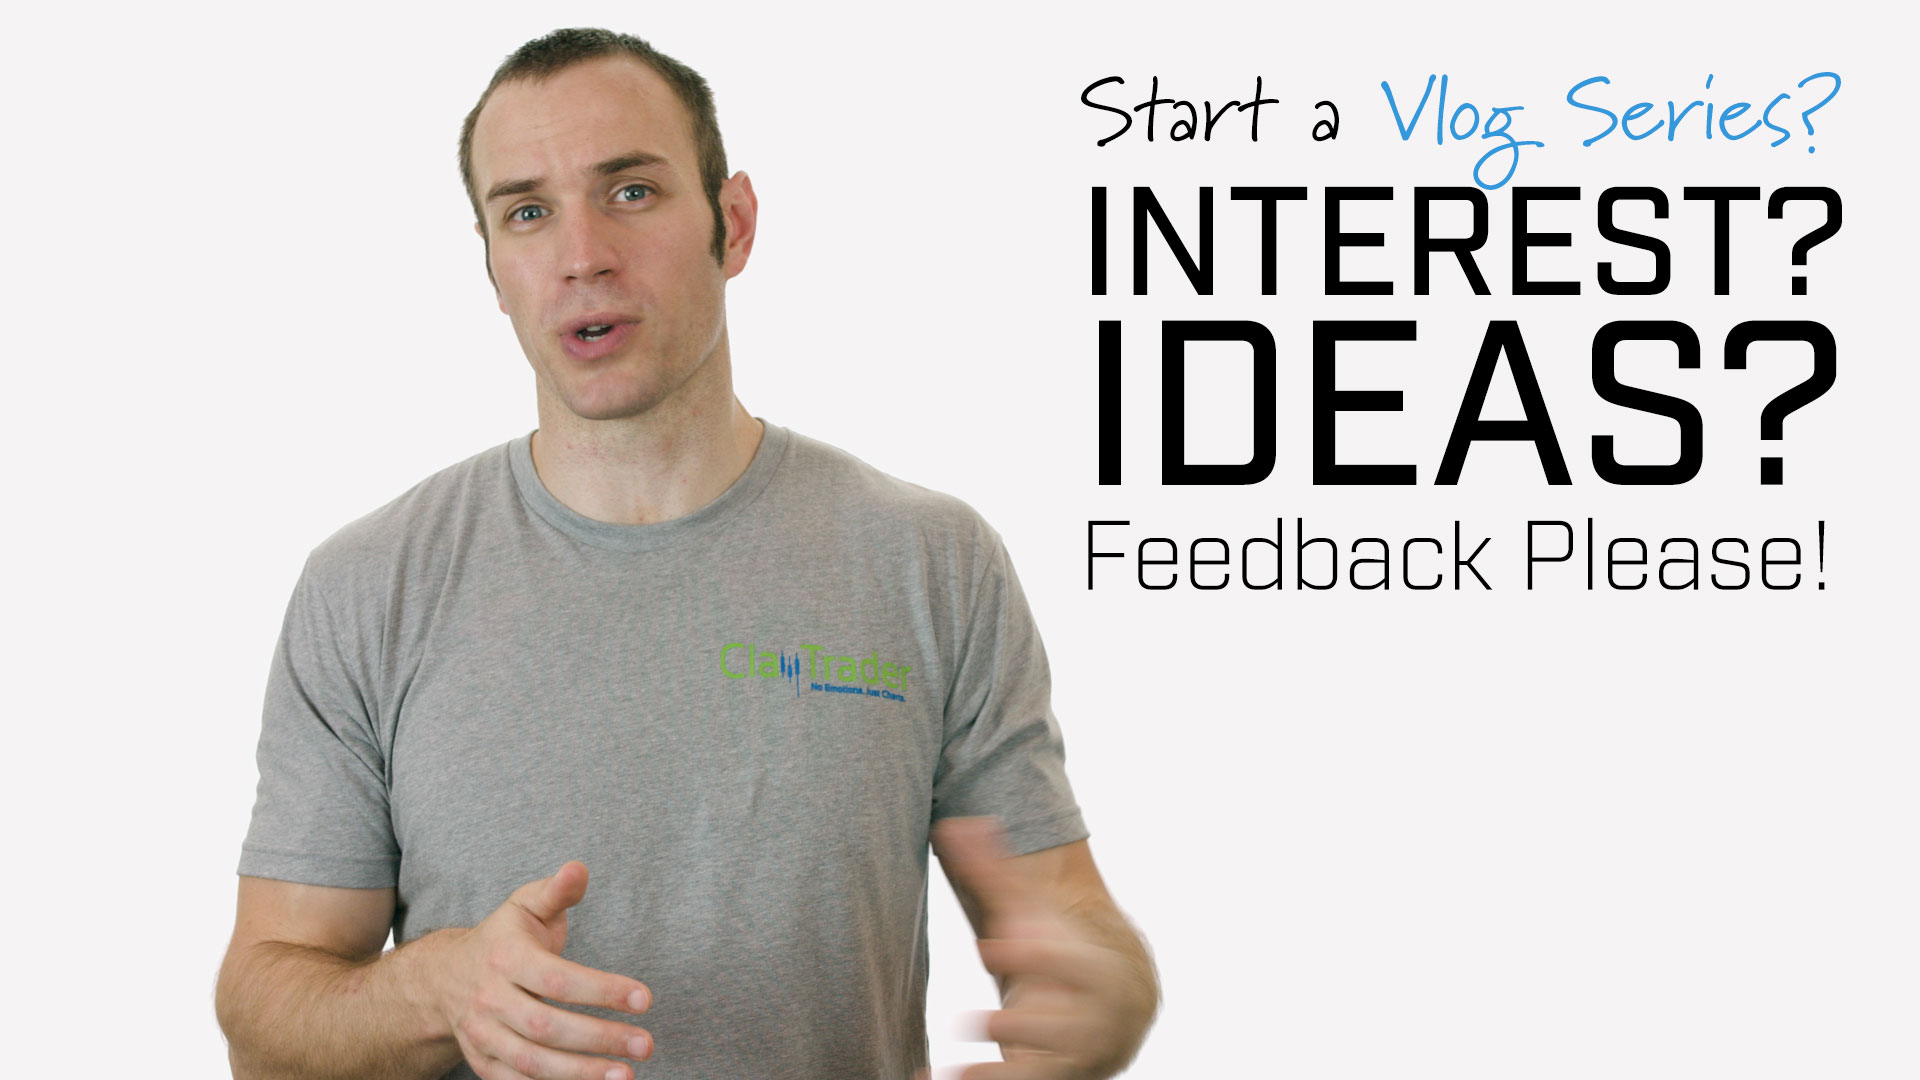 Start a Vlog Series? Interest? Ideas? Feedback Please!